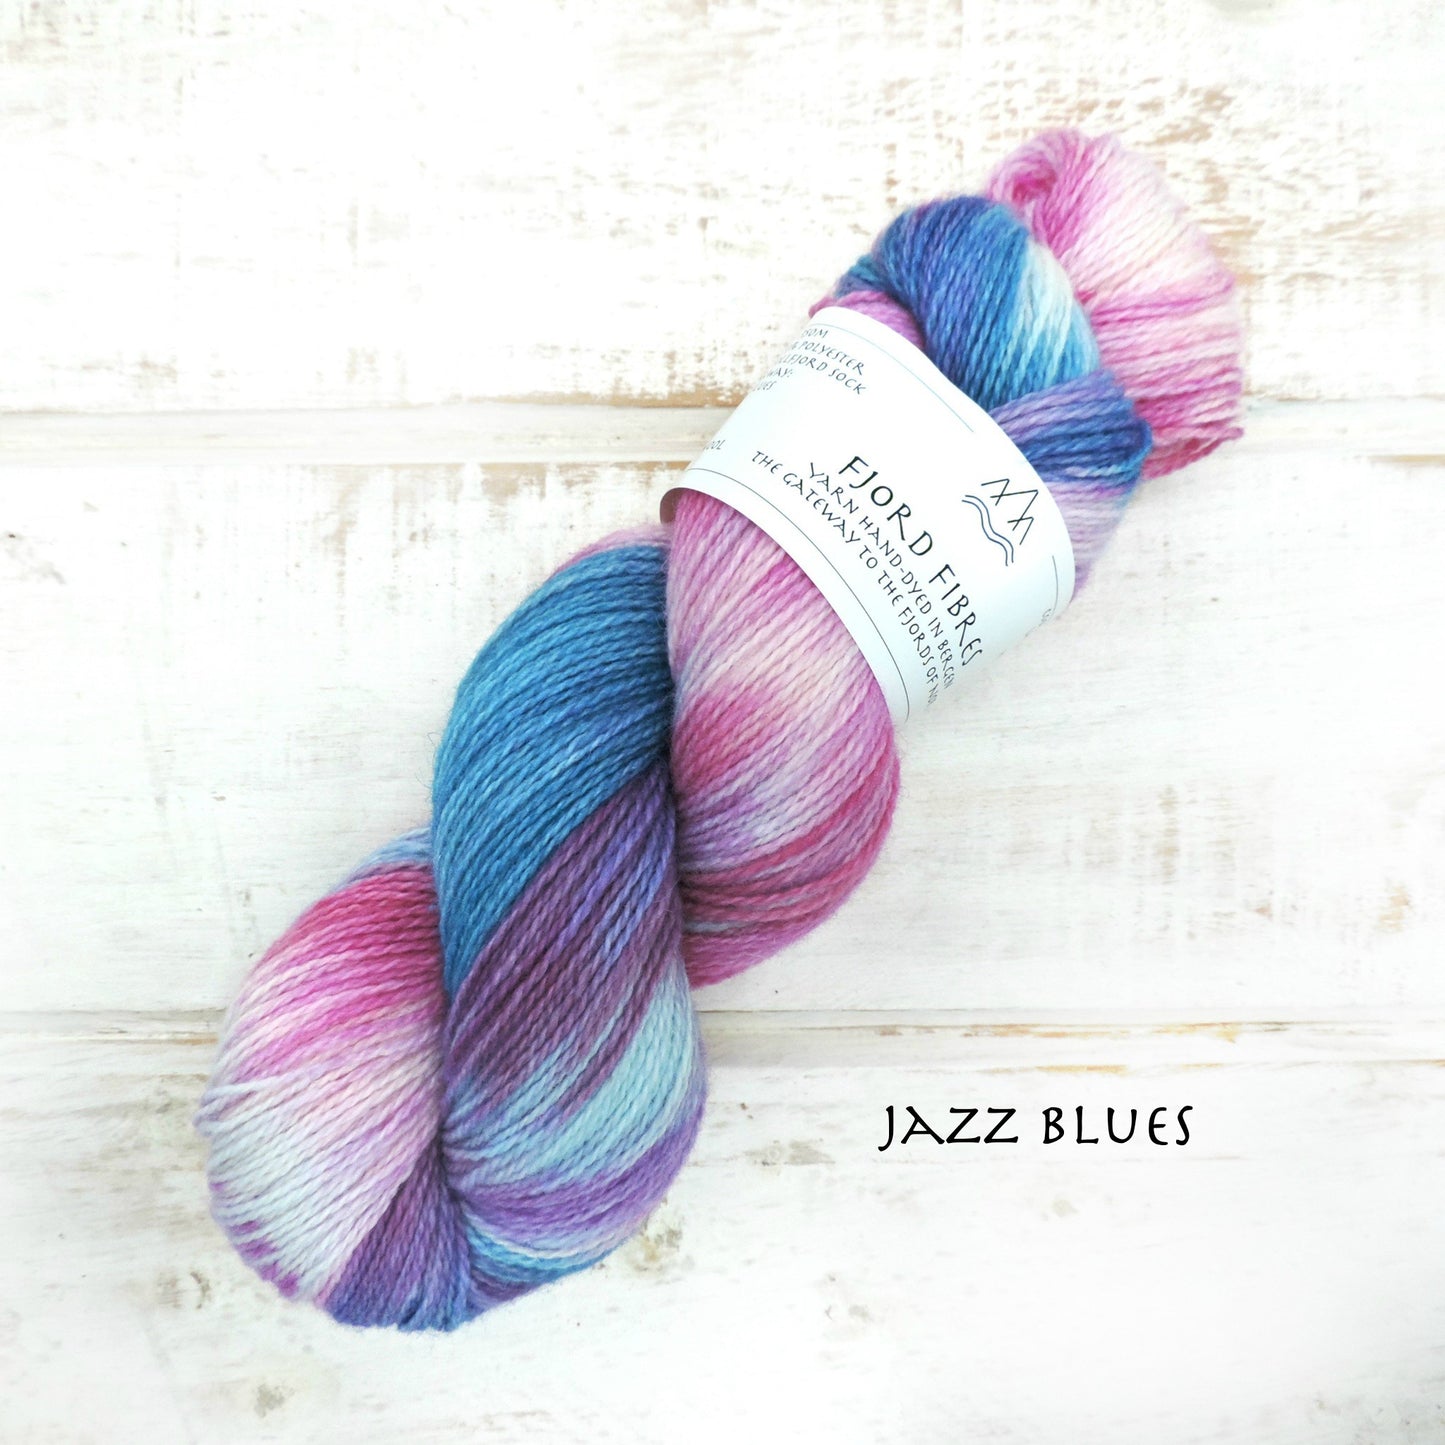 All that Jazz Socks Kit - Jazz Blues/Mariana -  Yarn and Printed Pattern in English/Norwegian